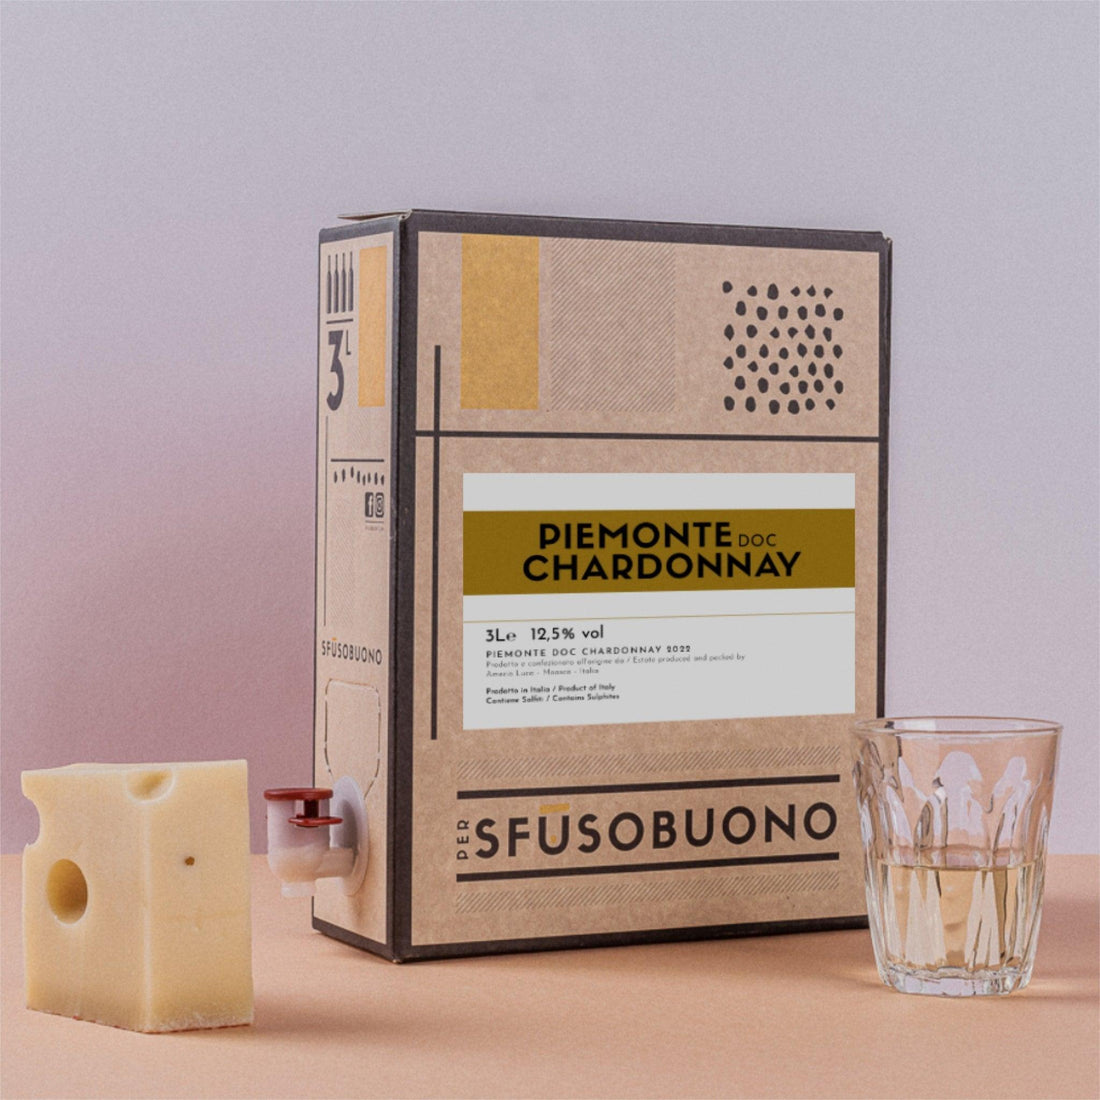 Chardonnay Piemonte 3L - Sfusobuono